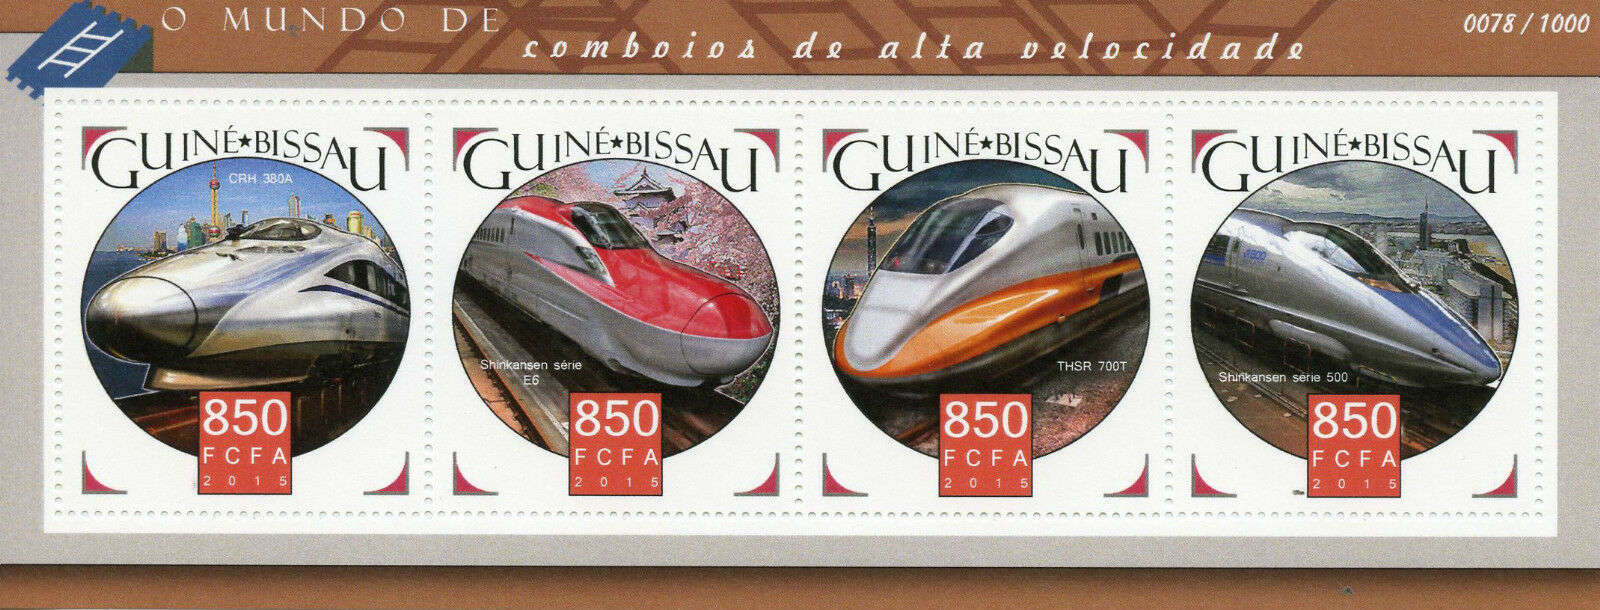 Guinea-Bissau 2015 MNH High-Speed Trains 4v M/S Shinkansen Railways Stamps